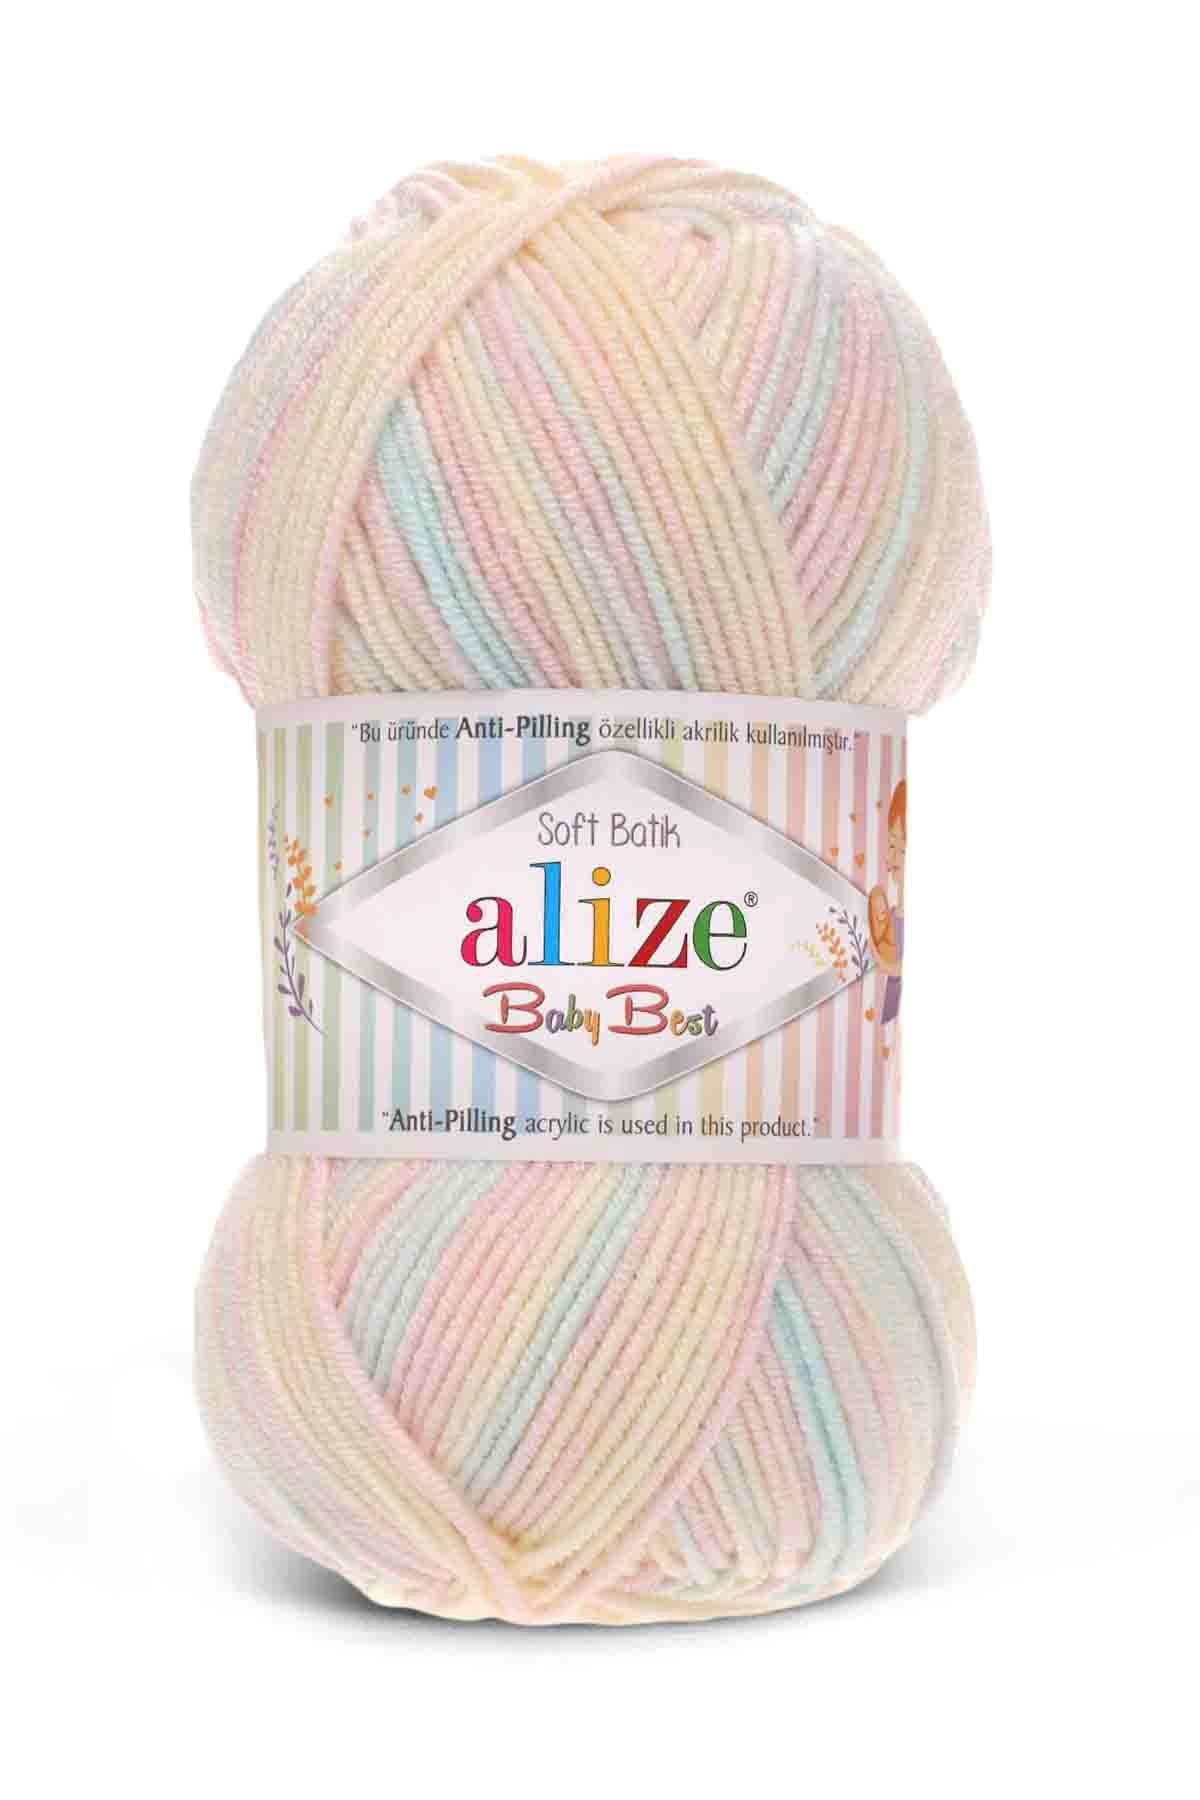 Alize Baby Best Anti Pilling Acrylic Yarn